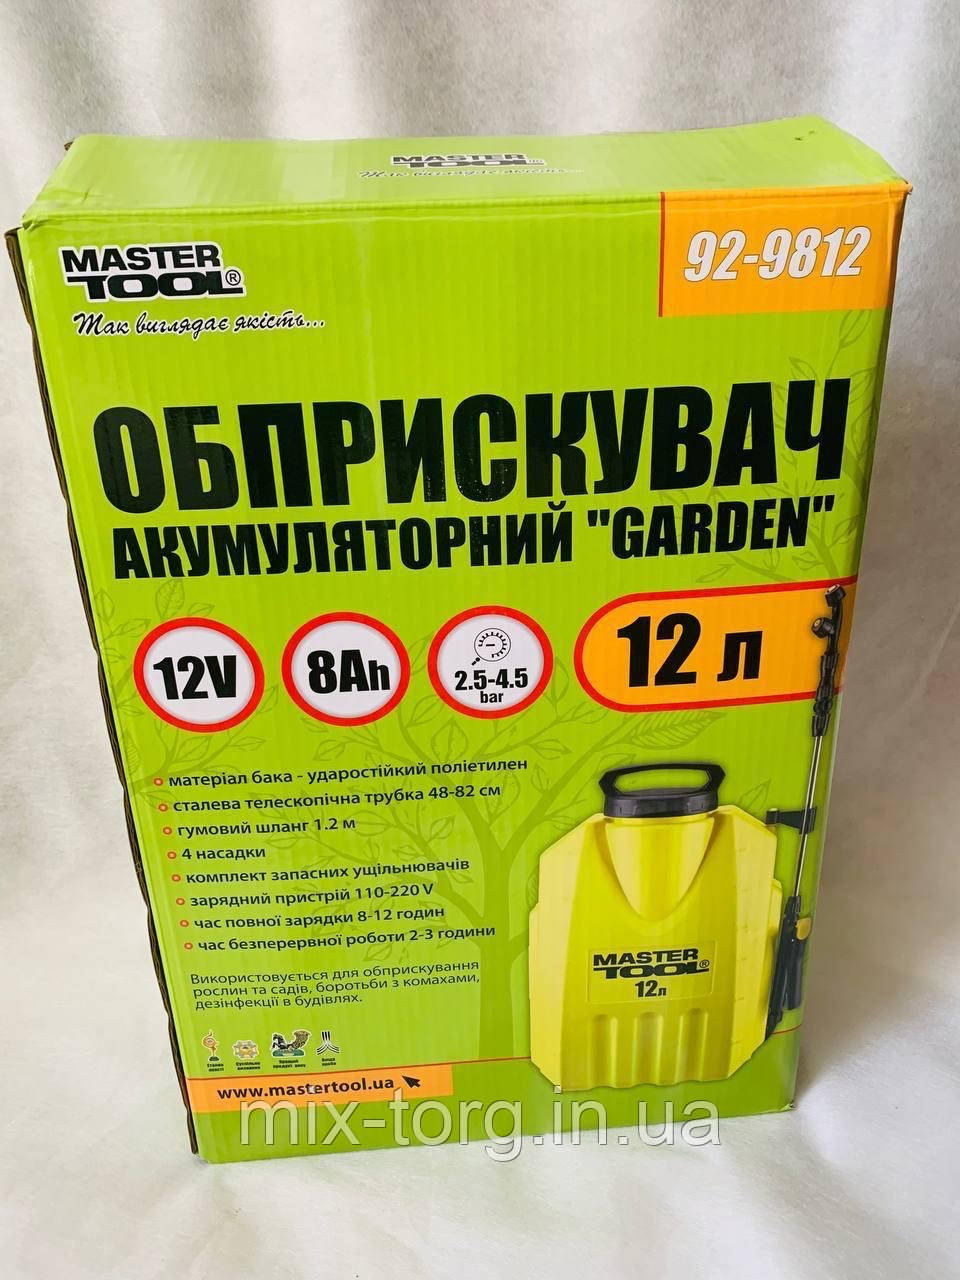 Обприскувач акумуляторний "Garden" MASTERTOOL 92-9812 (original)